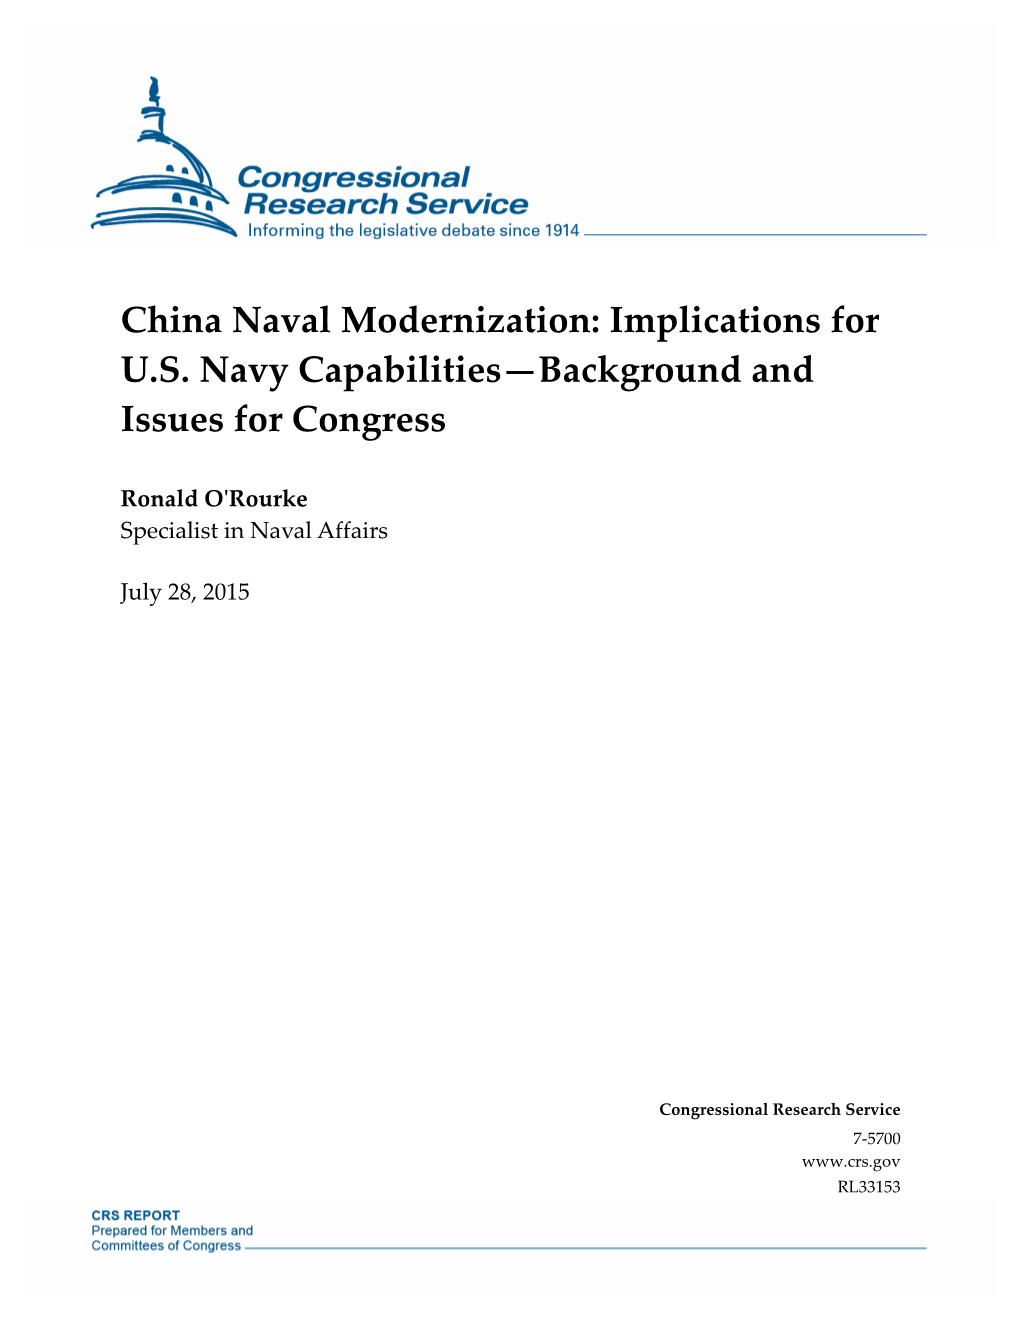 China Naval Modernization: Implications for U.S